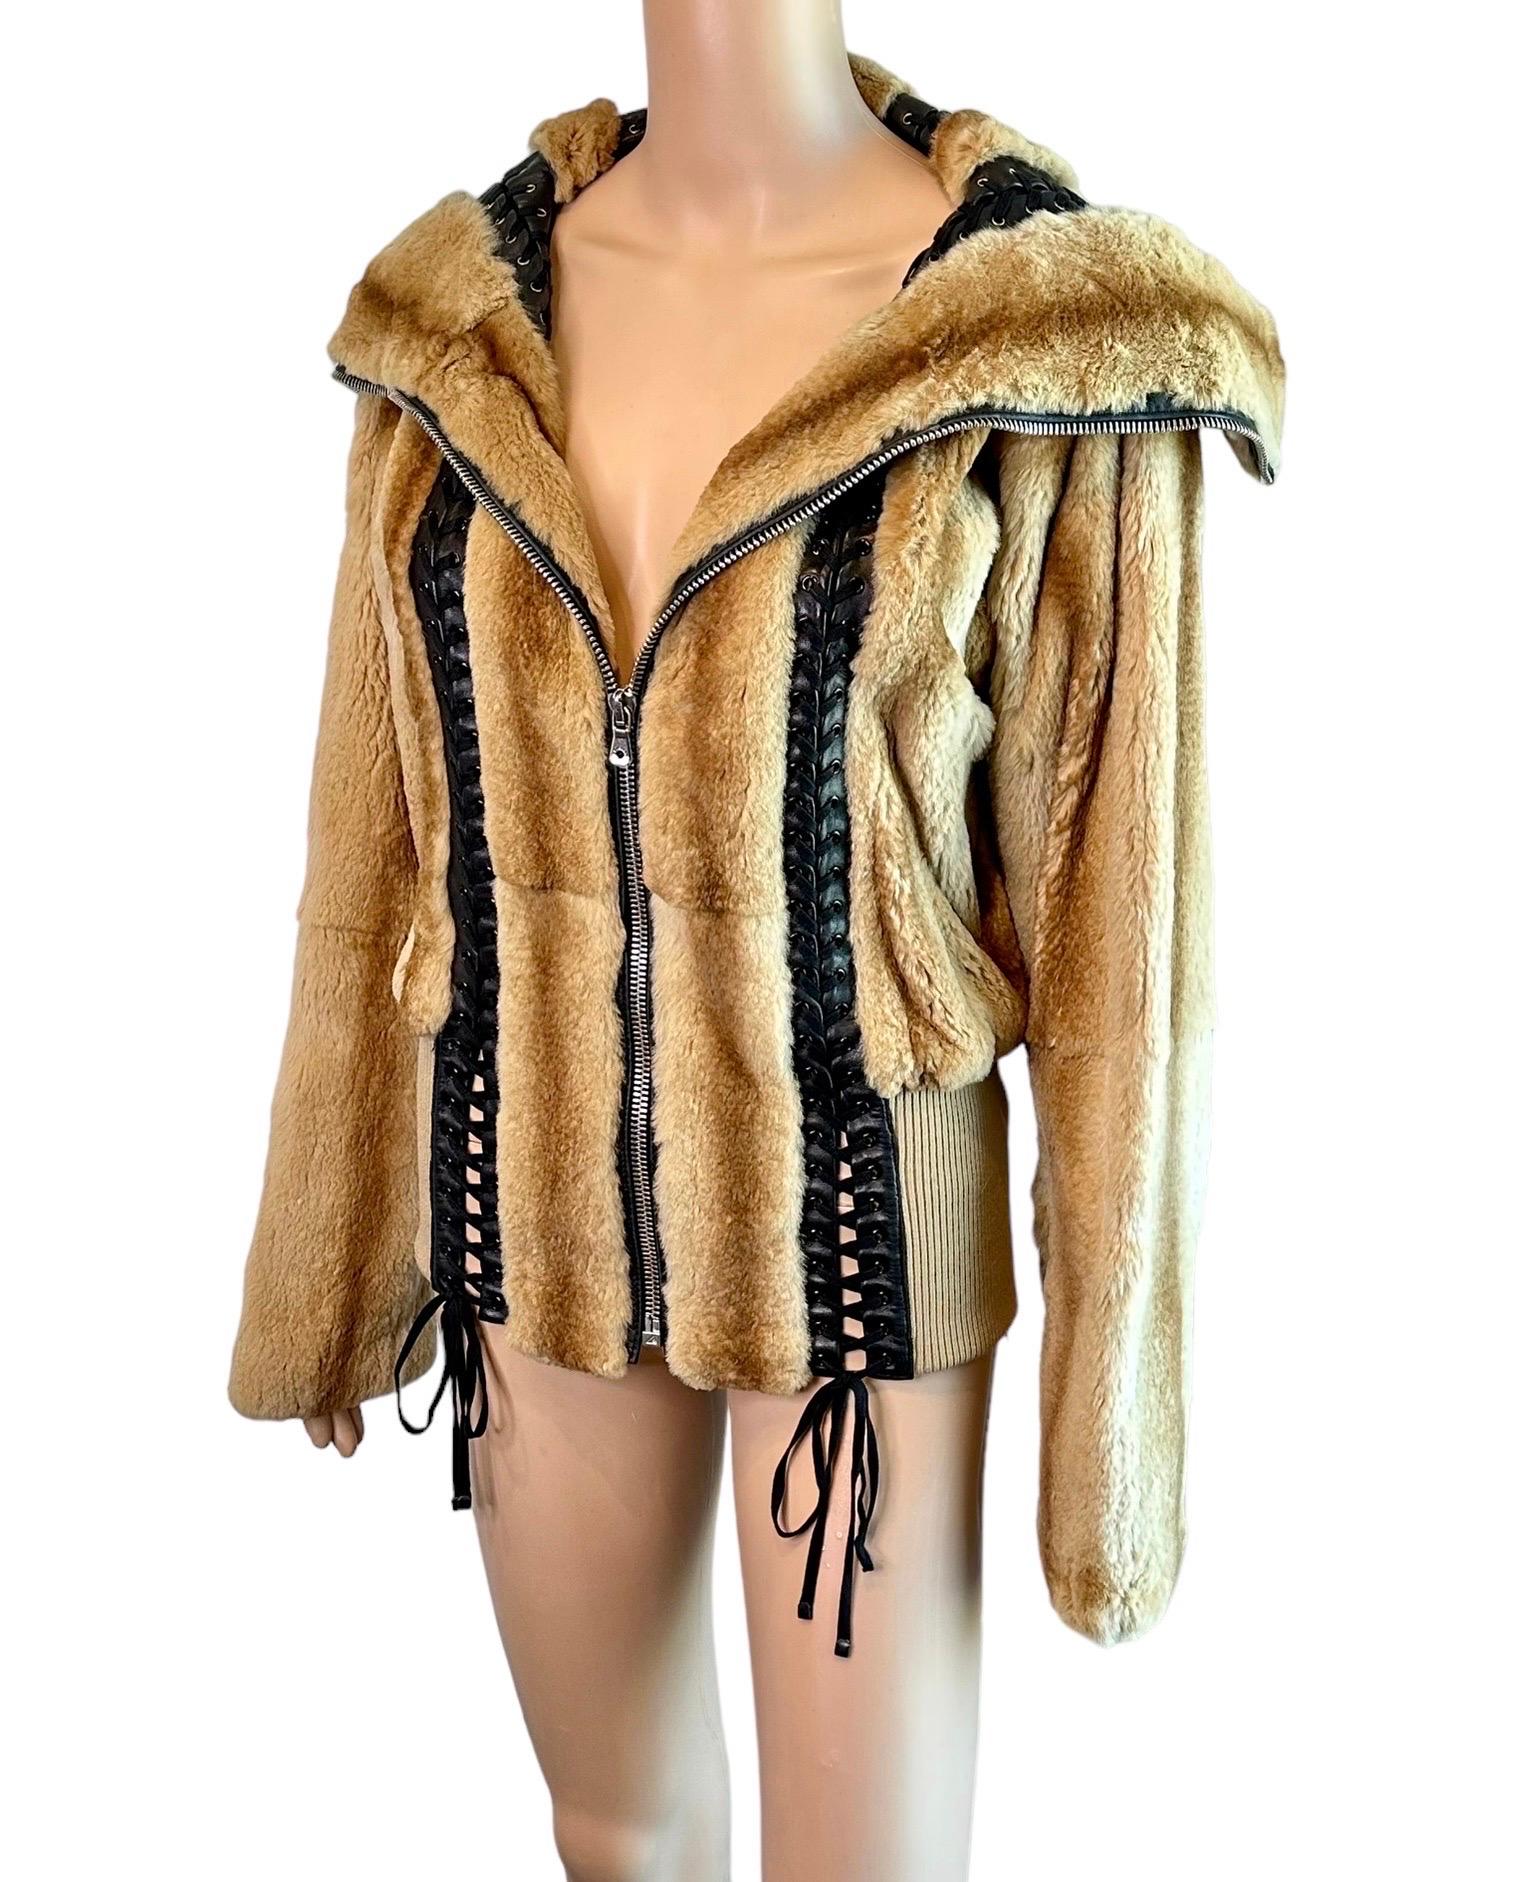 Dolce & Gabbana S/S 2003 Bondage Lace Up Weasel Fur Jacket Coat For Sale 5